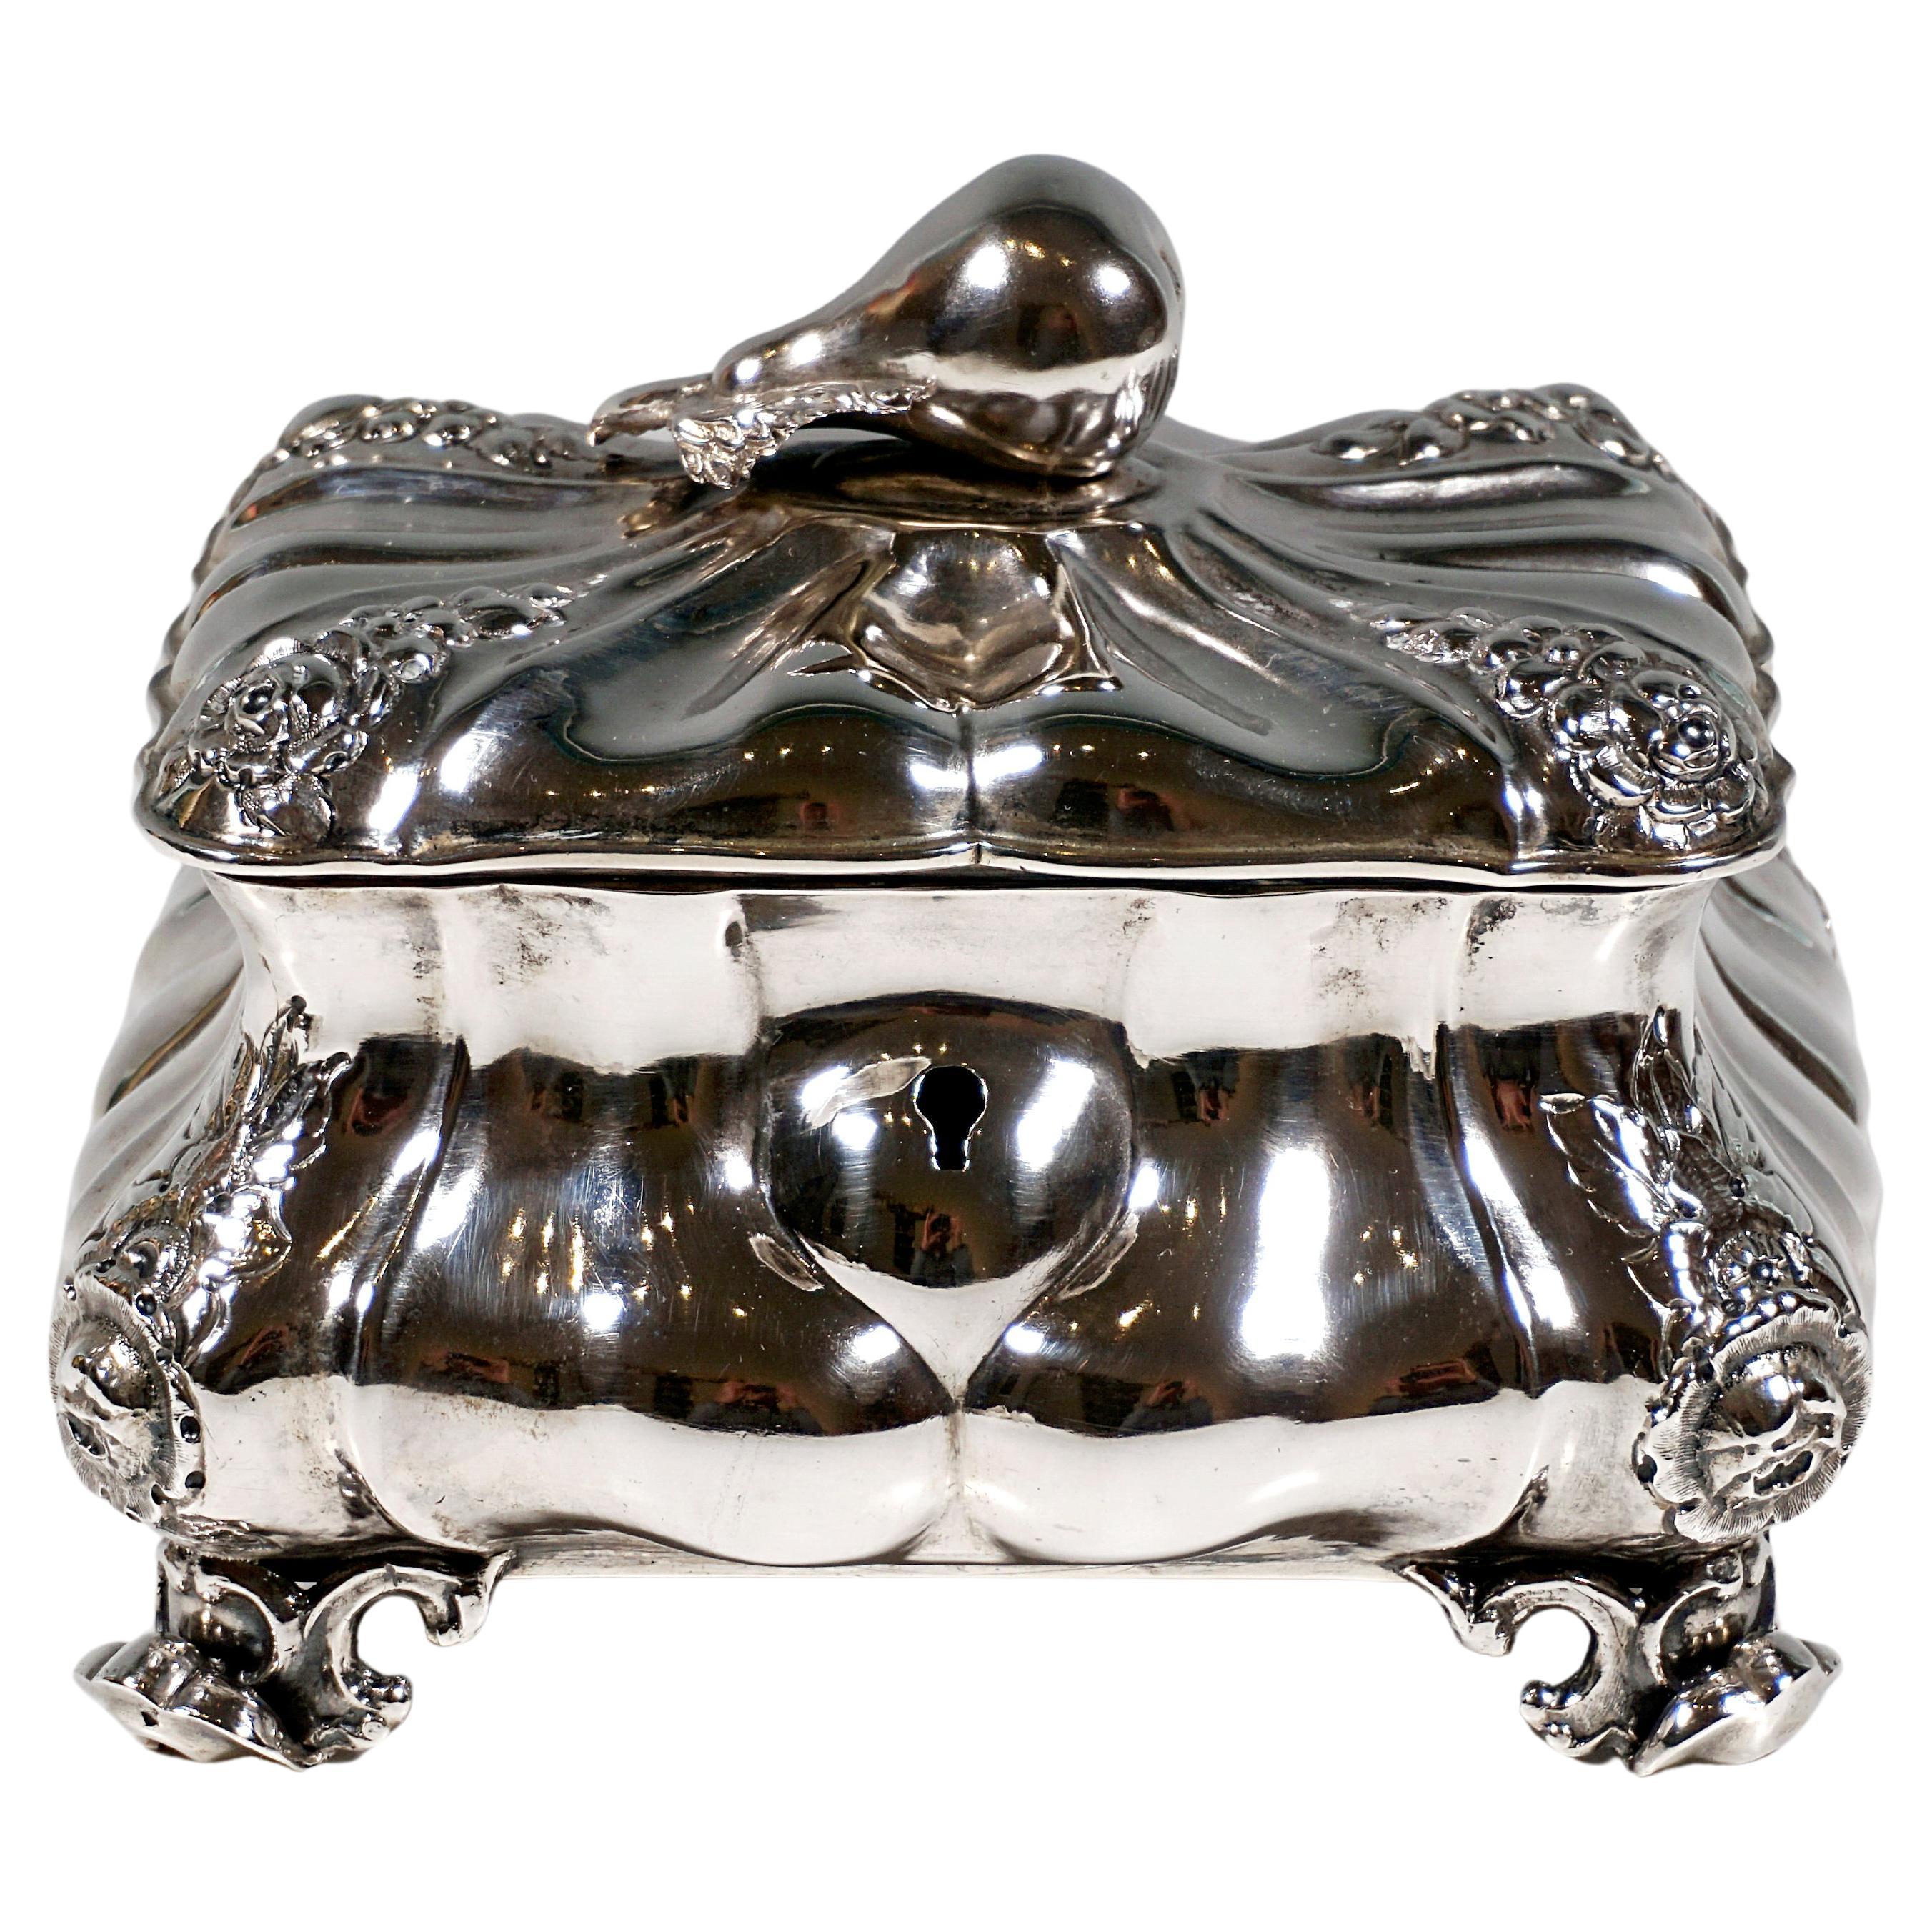 Antique Vienna Biedermeier Silver Sugar Box With Pear Knob, by Thomas Dub, 1863